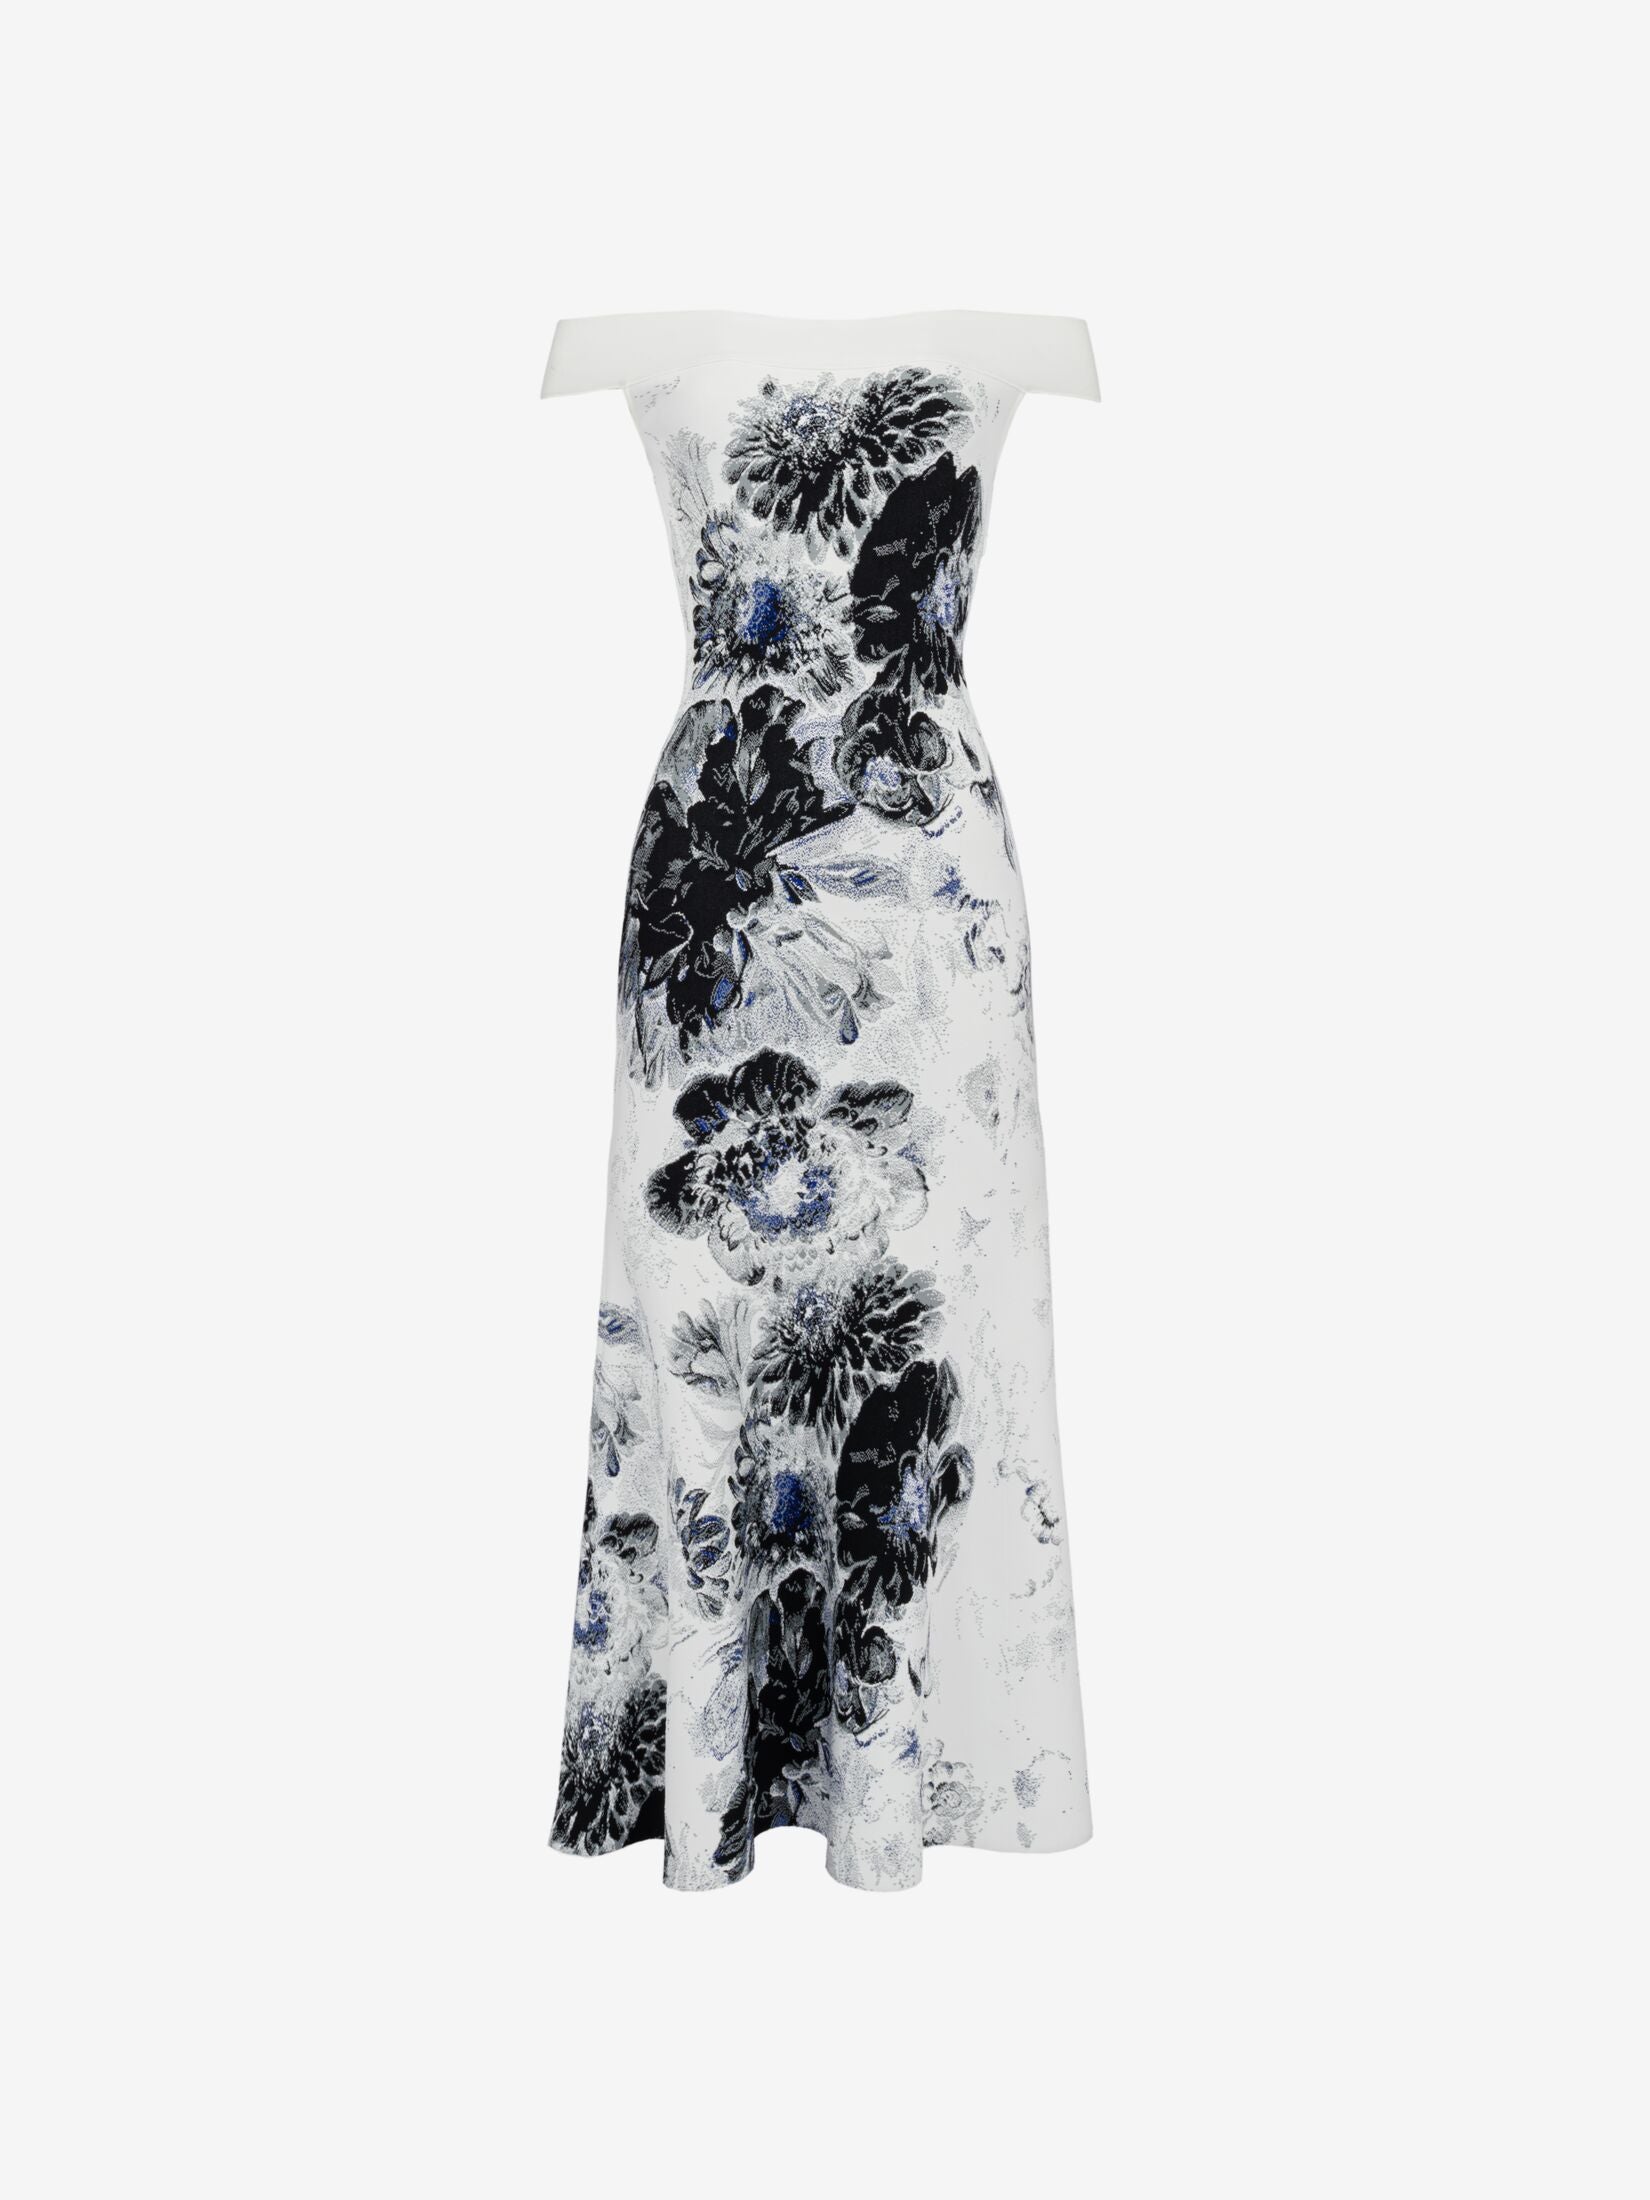 Women's Chiaroscuro Jacquard Dress in White/black/blue